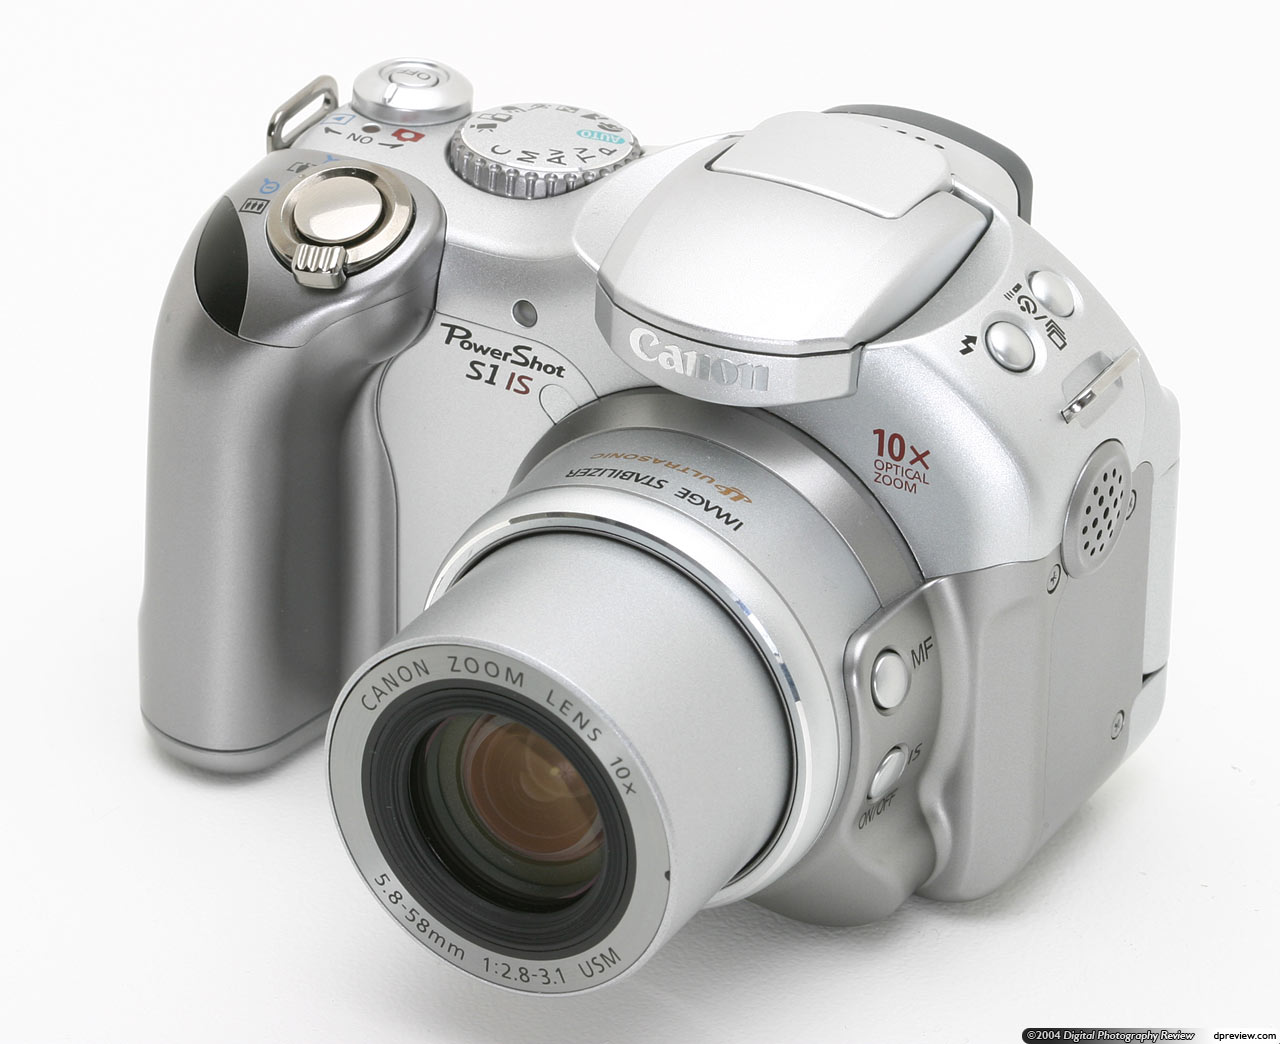 Canon Powershot S1 IS Digital Camera